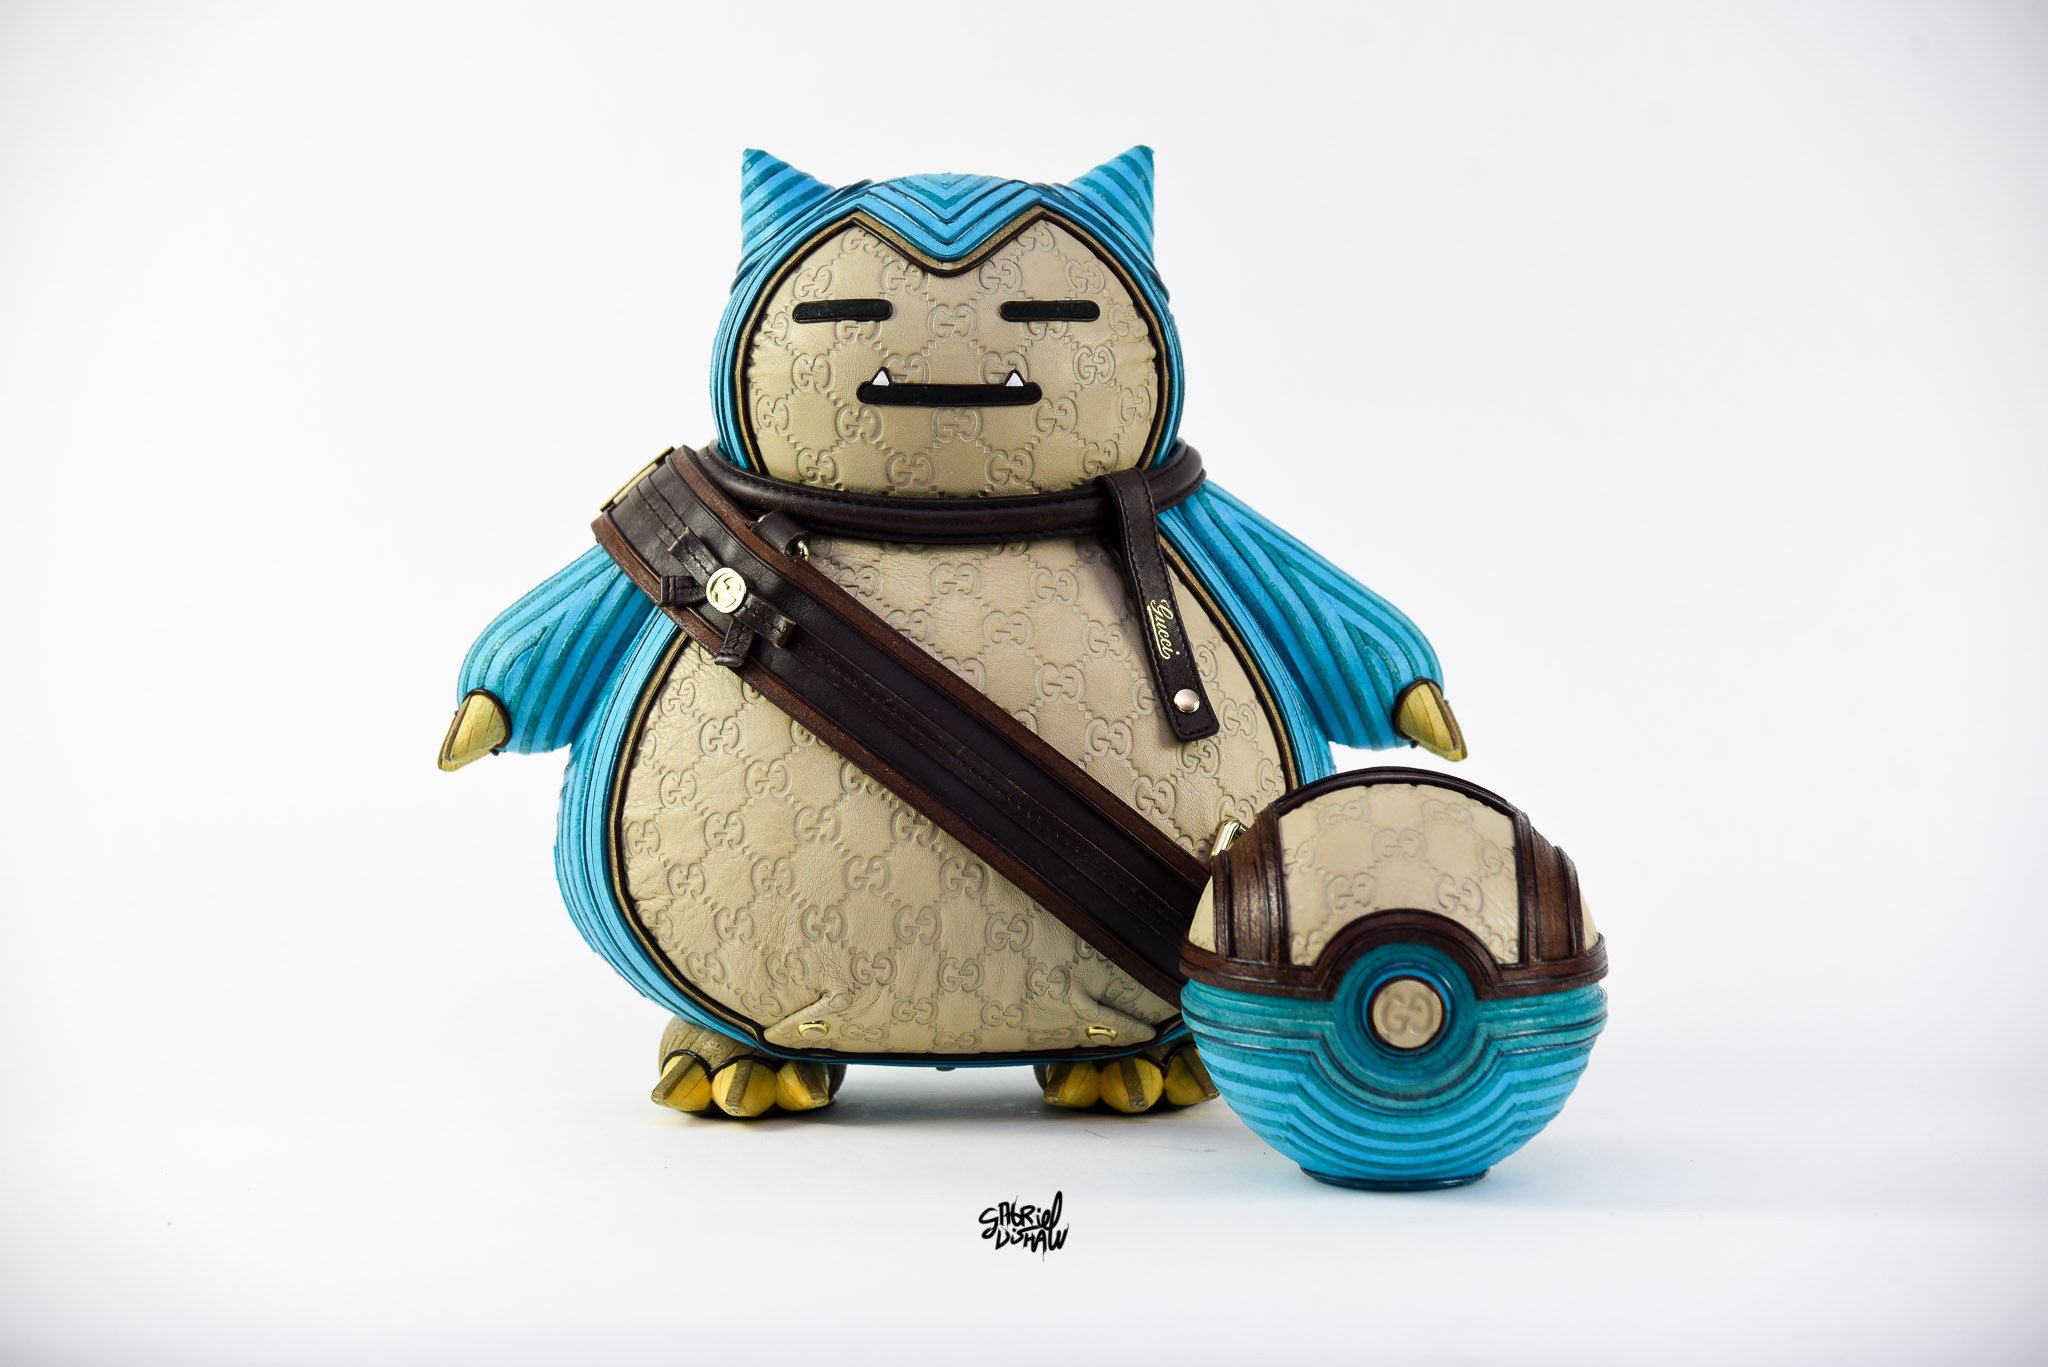 SnorLucci a Gucci inspired Snorlax Pokémon — Gabriel Dishaw